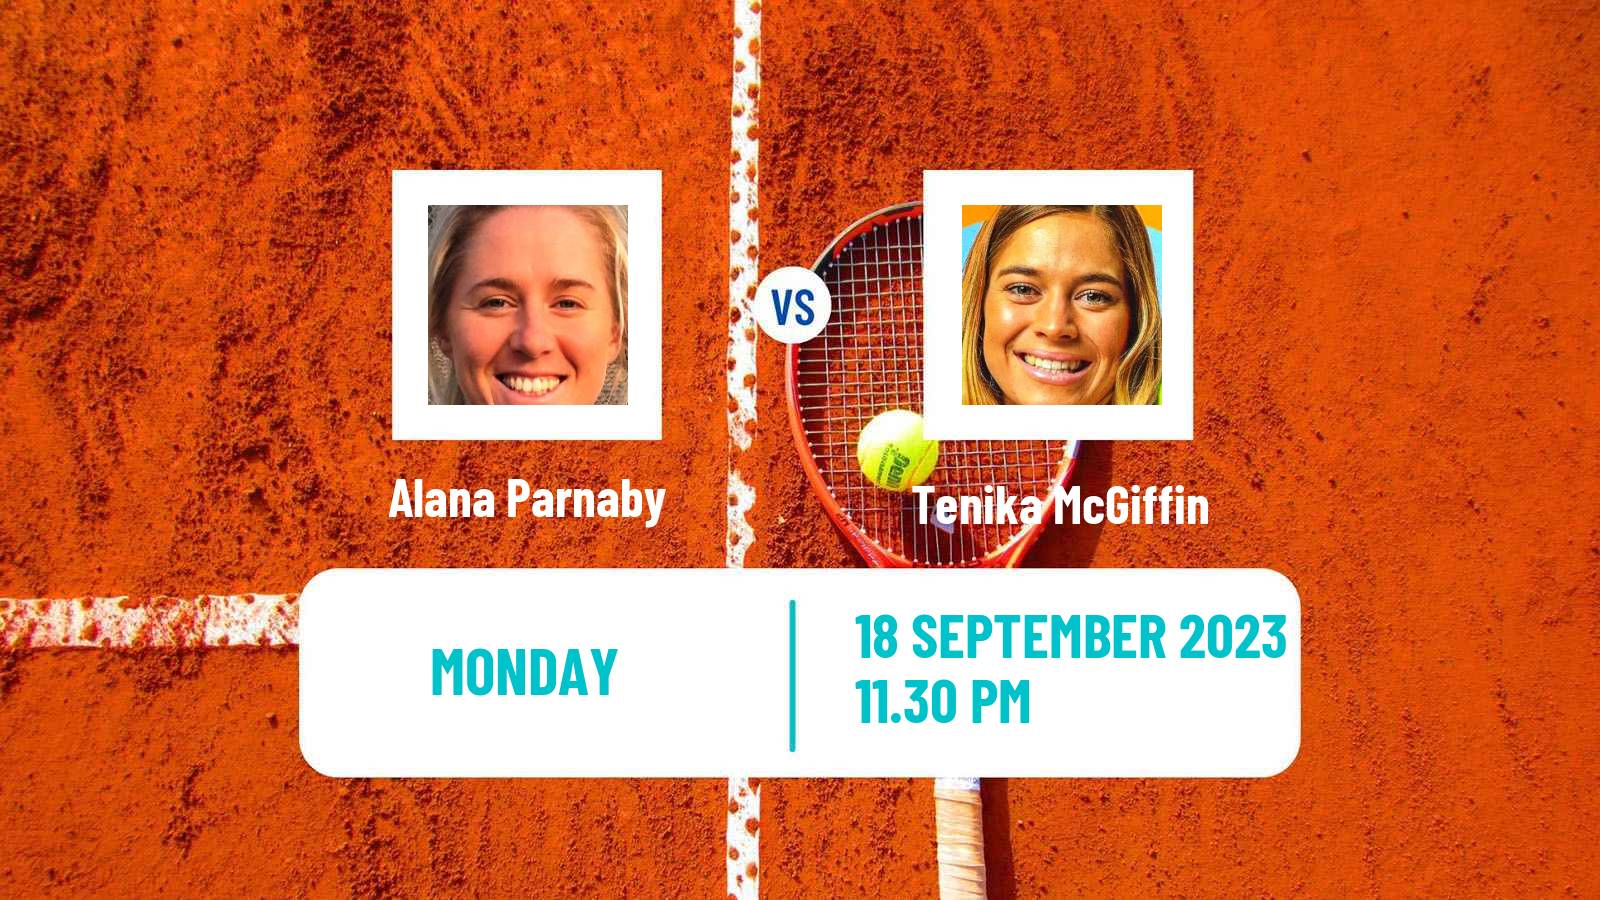 Tennis ITF W25 Perth 2 Women 2023 Alana Parnaby - Tenika McGiffin